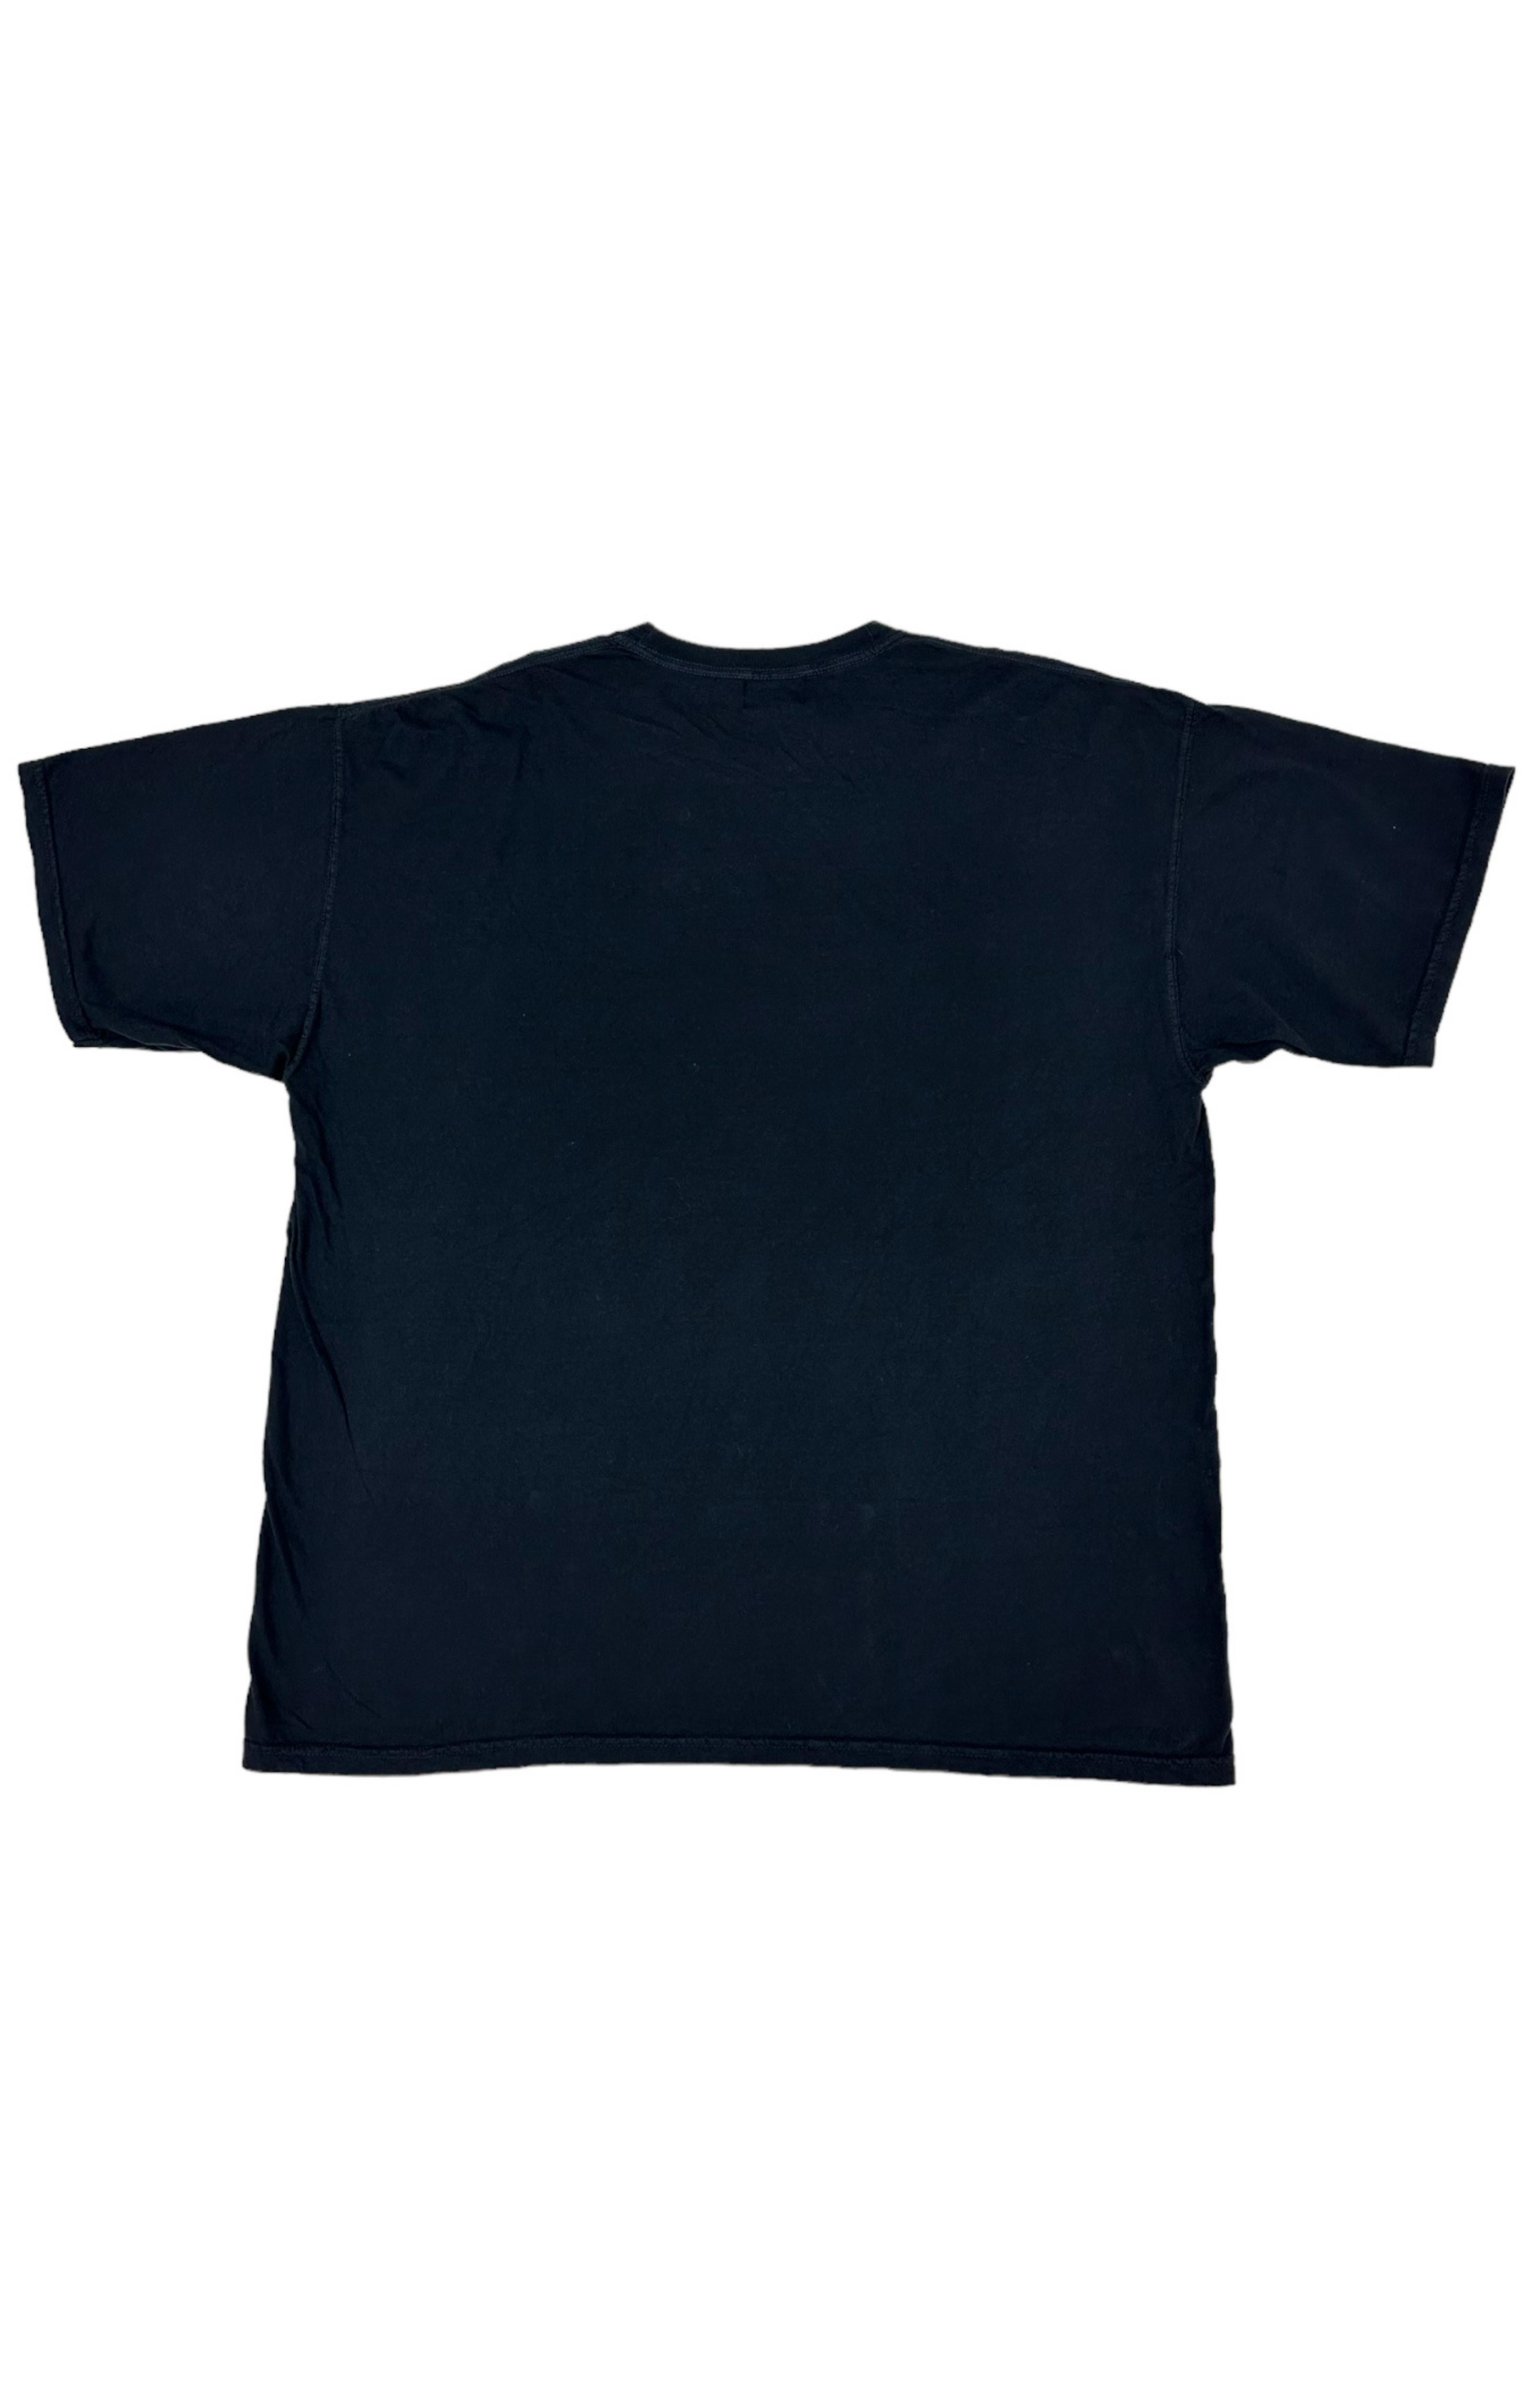 PSYCHWORLD T-shirt Size: 2XL